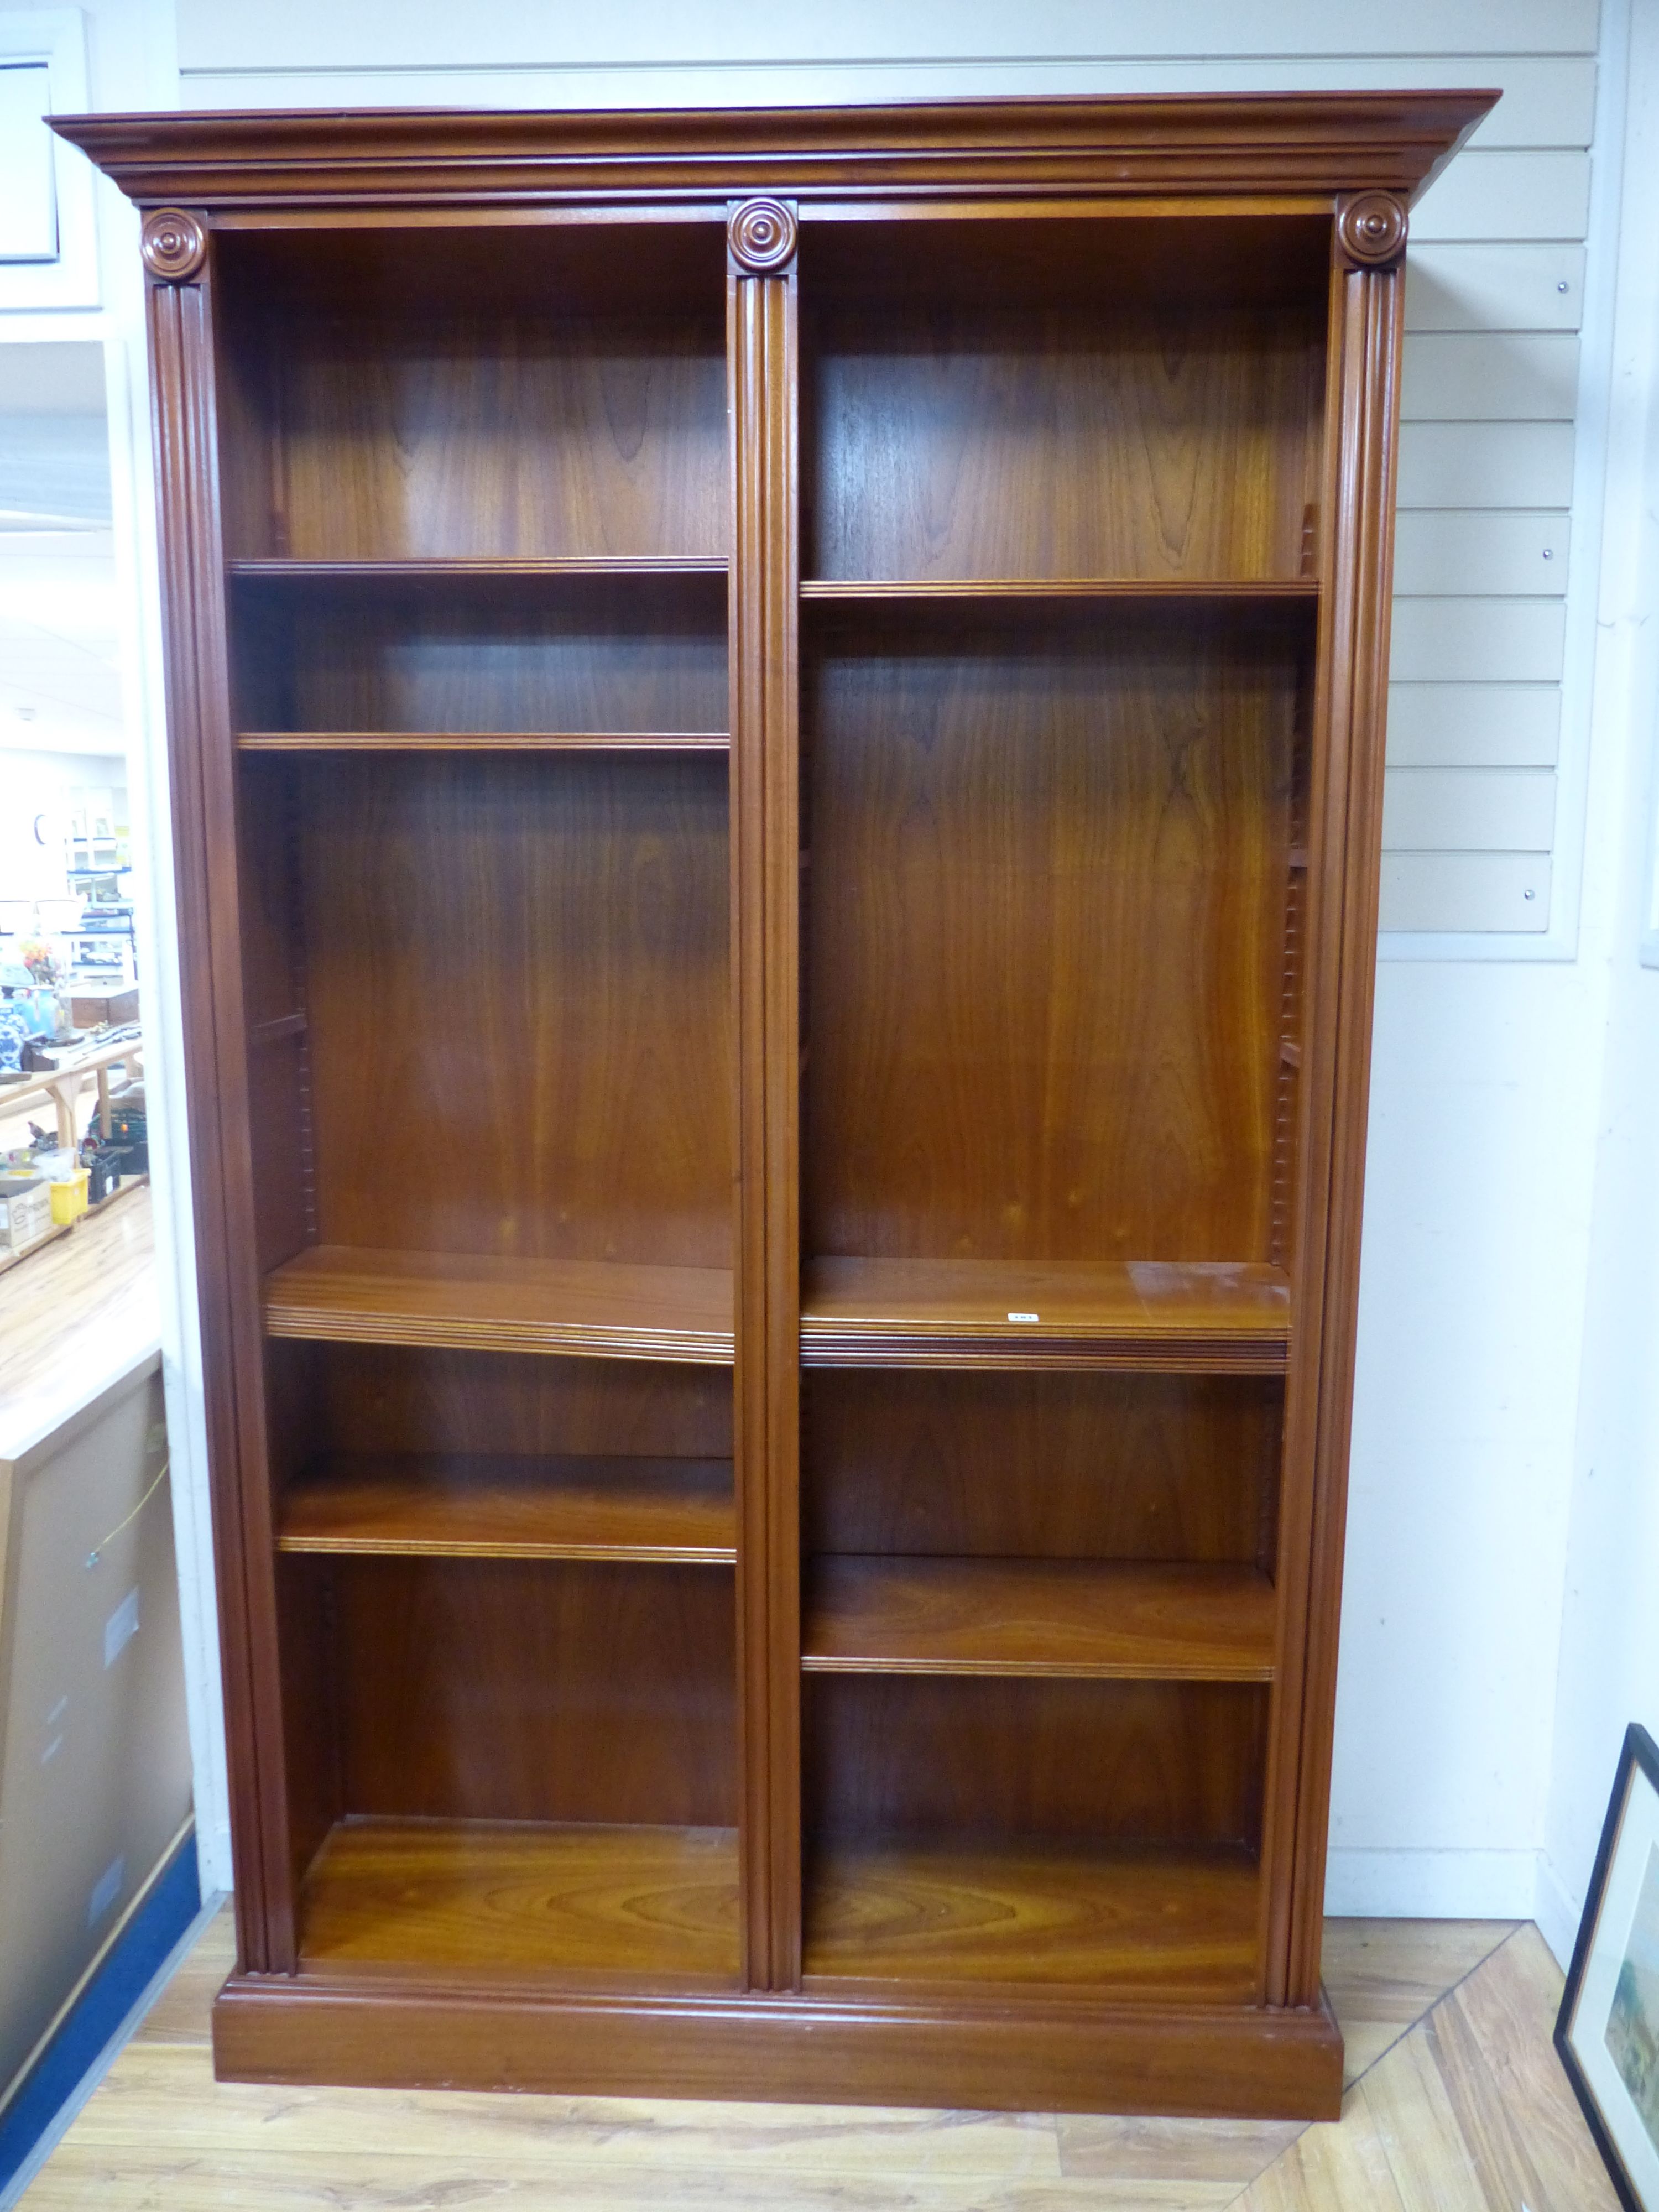 A Regency style mahogany open bookcase, width 136cm, depth 38cm, height 214cm